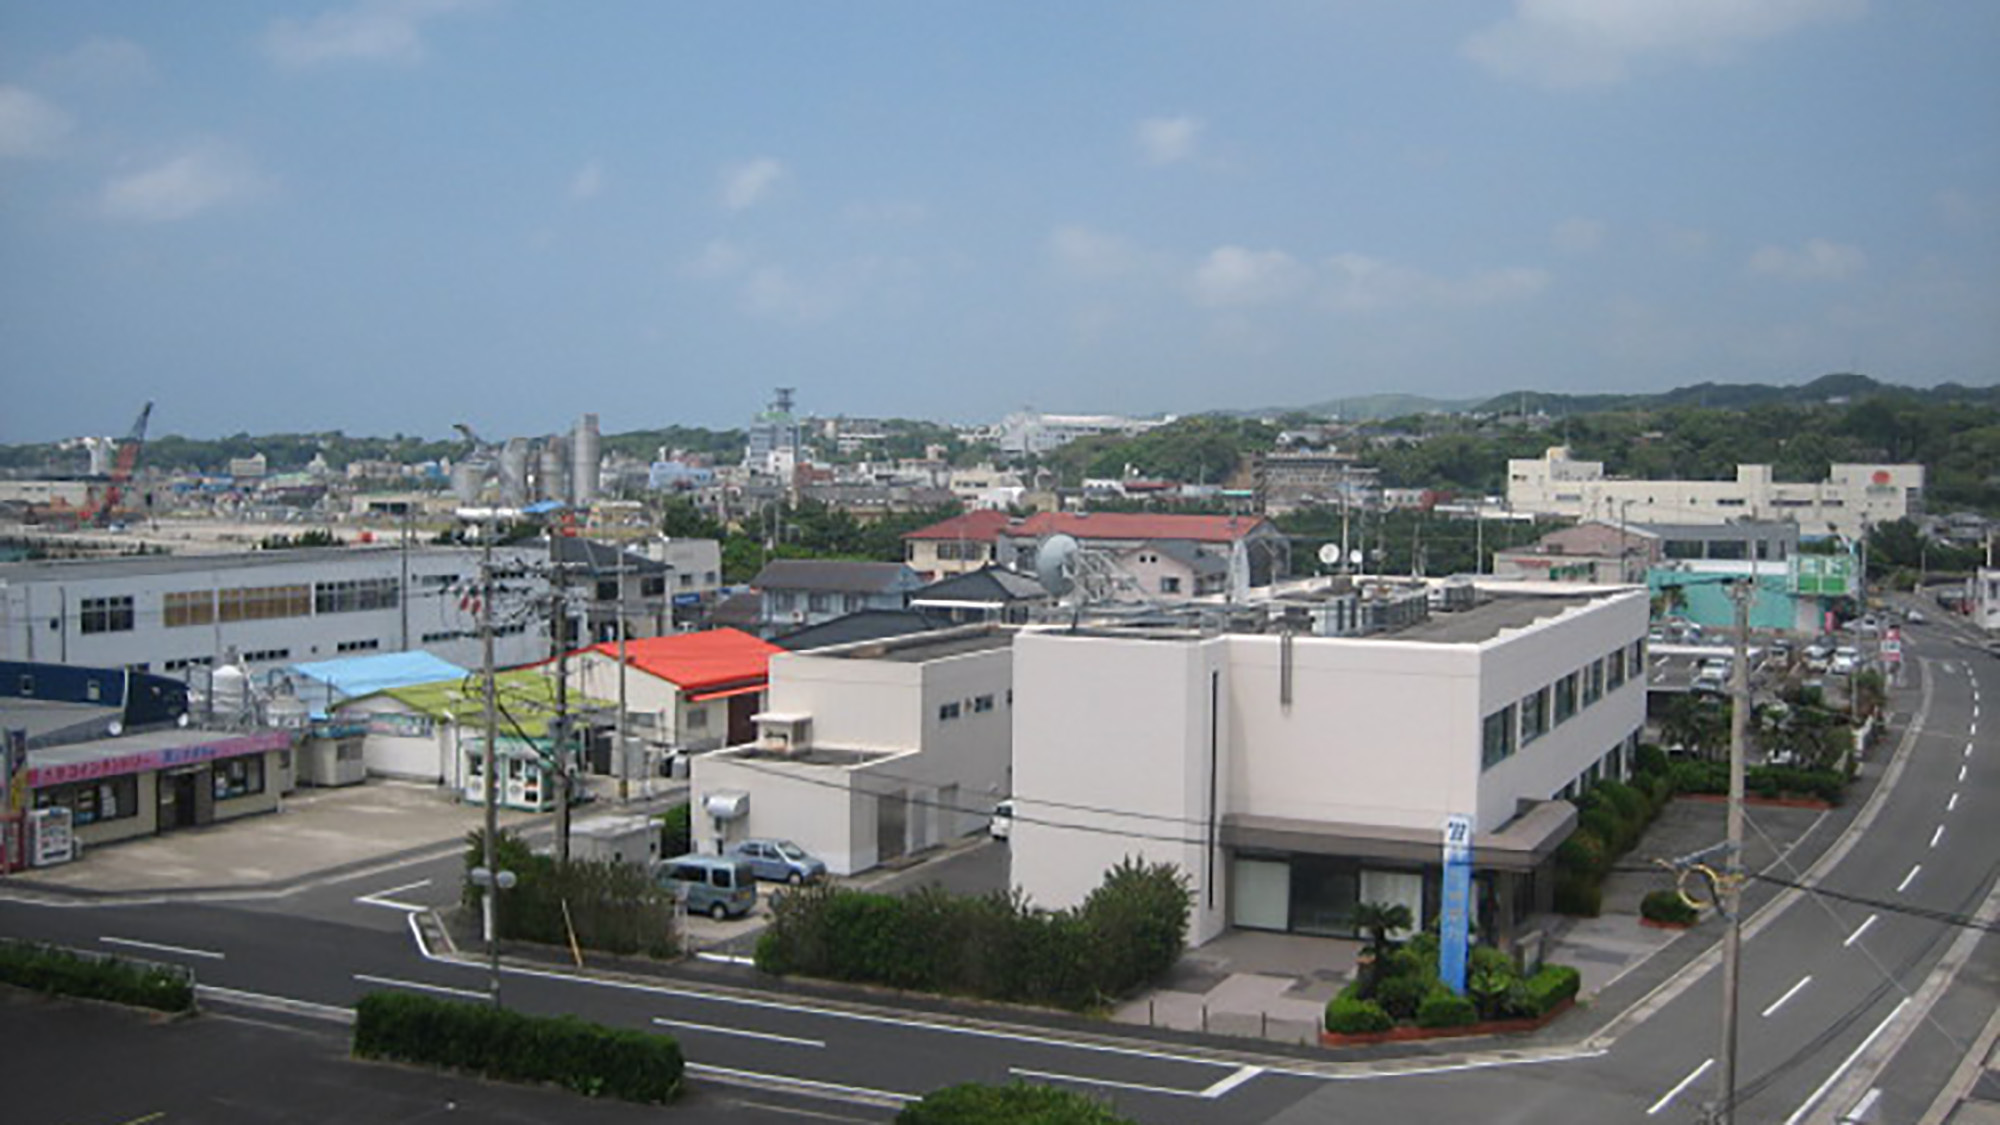 Business Inn Tanegashima (Tanegashima) Amenities